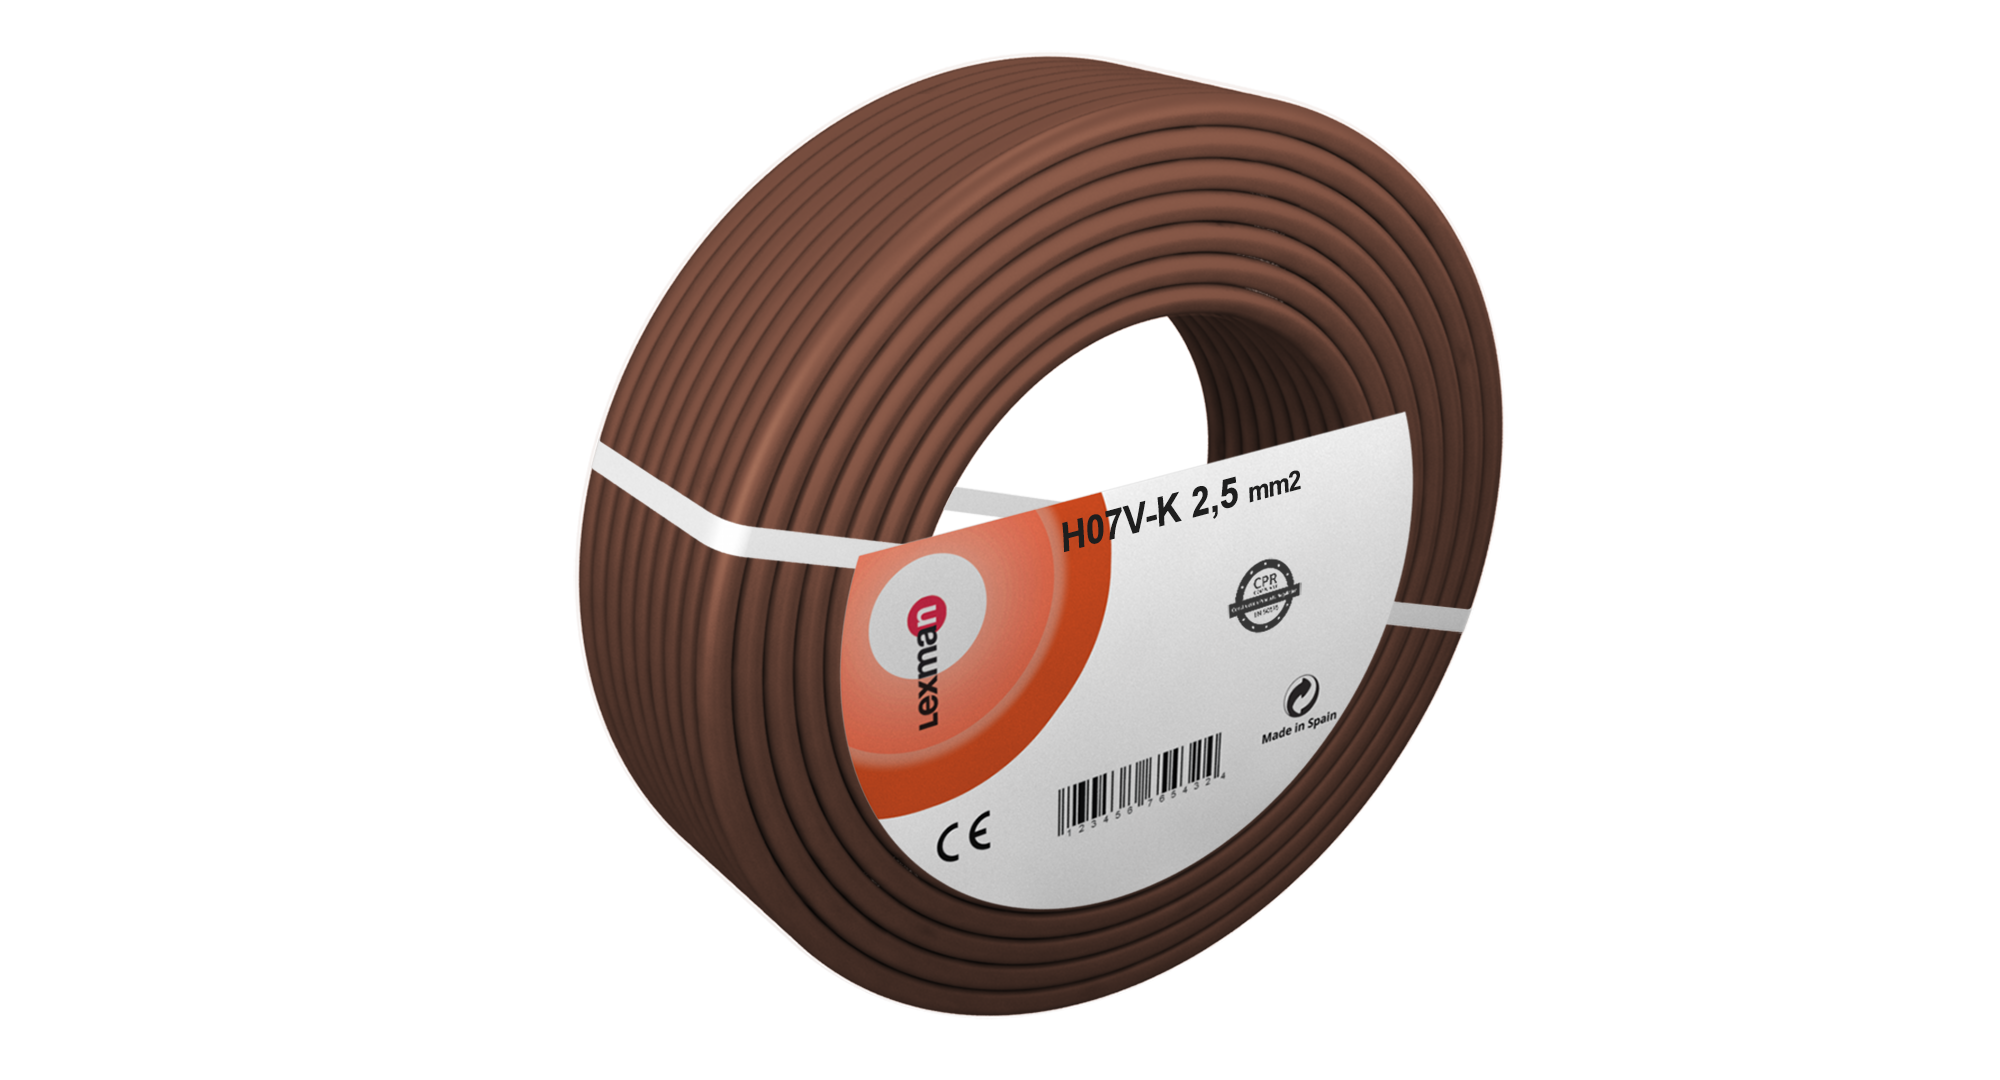 Cable eléctrico top cable h07v-k marrón 2,5 mm² 200 m